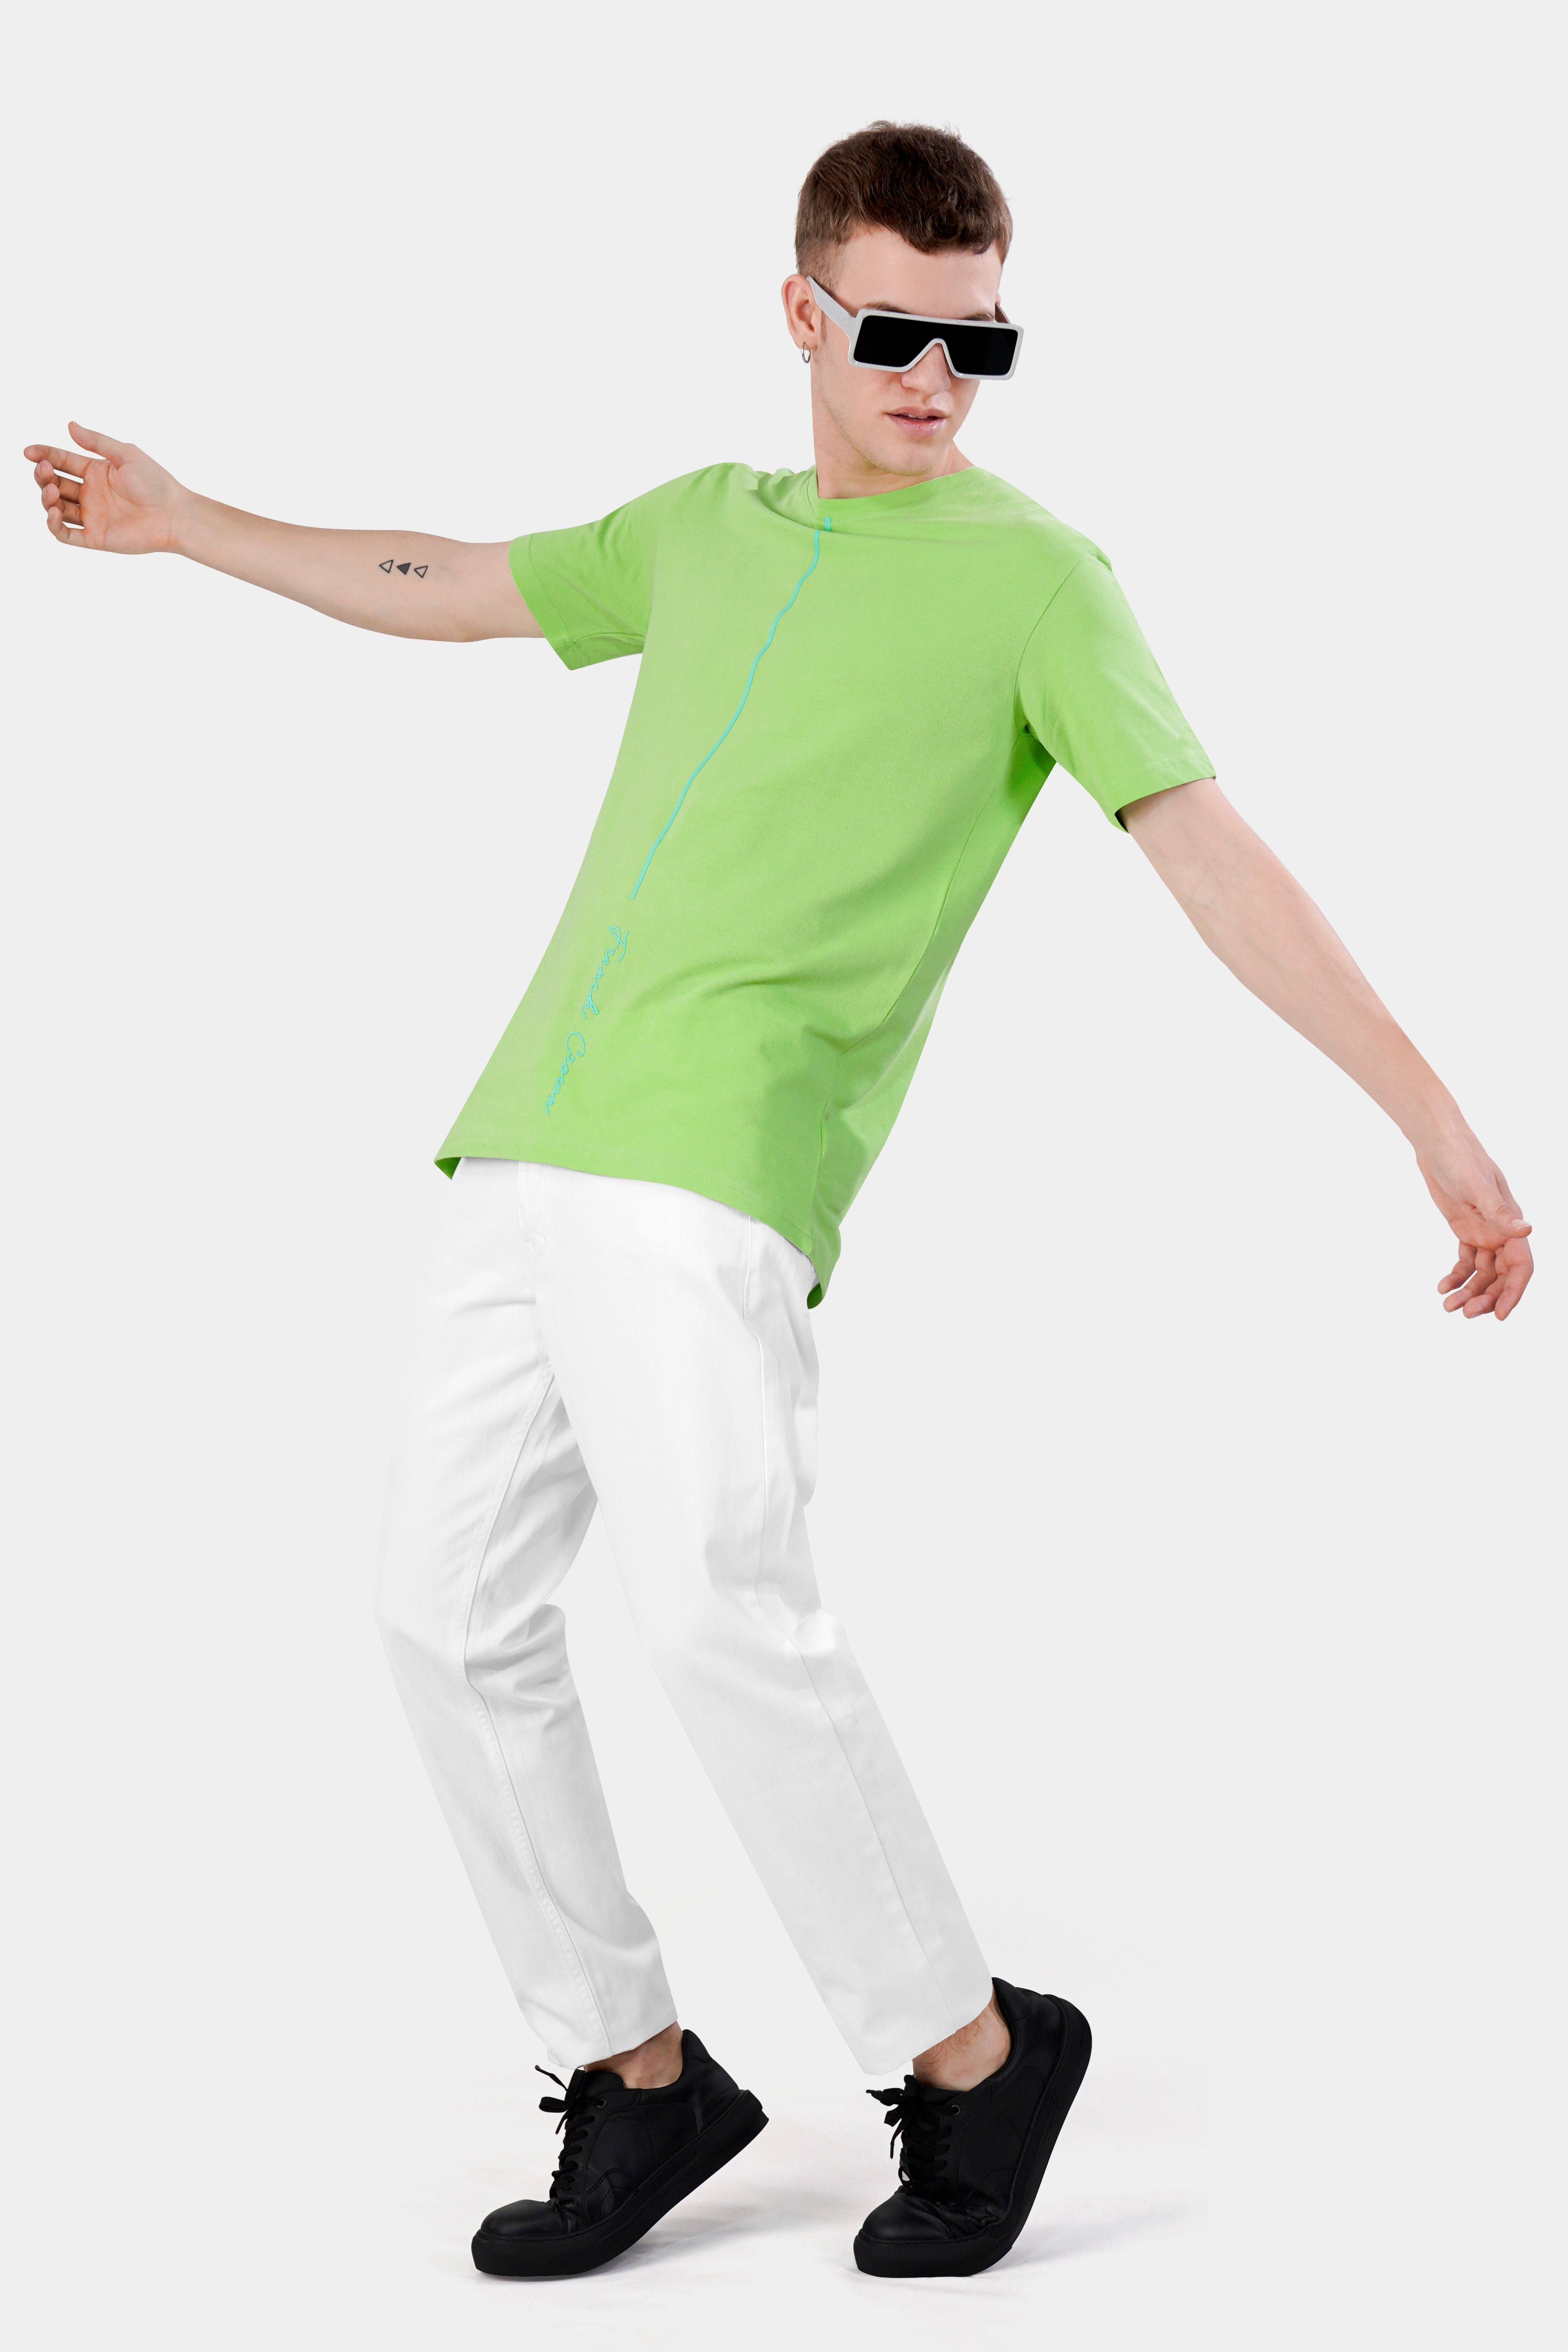 Pistachio Green Premium Cotton Pique T-shirt TS947-S, TS947-M, TS947-L, TS947-XL, TS947-XXL